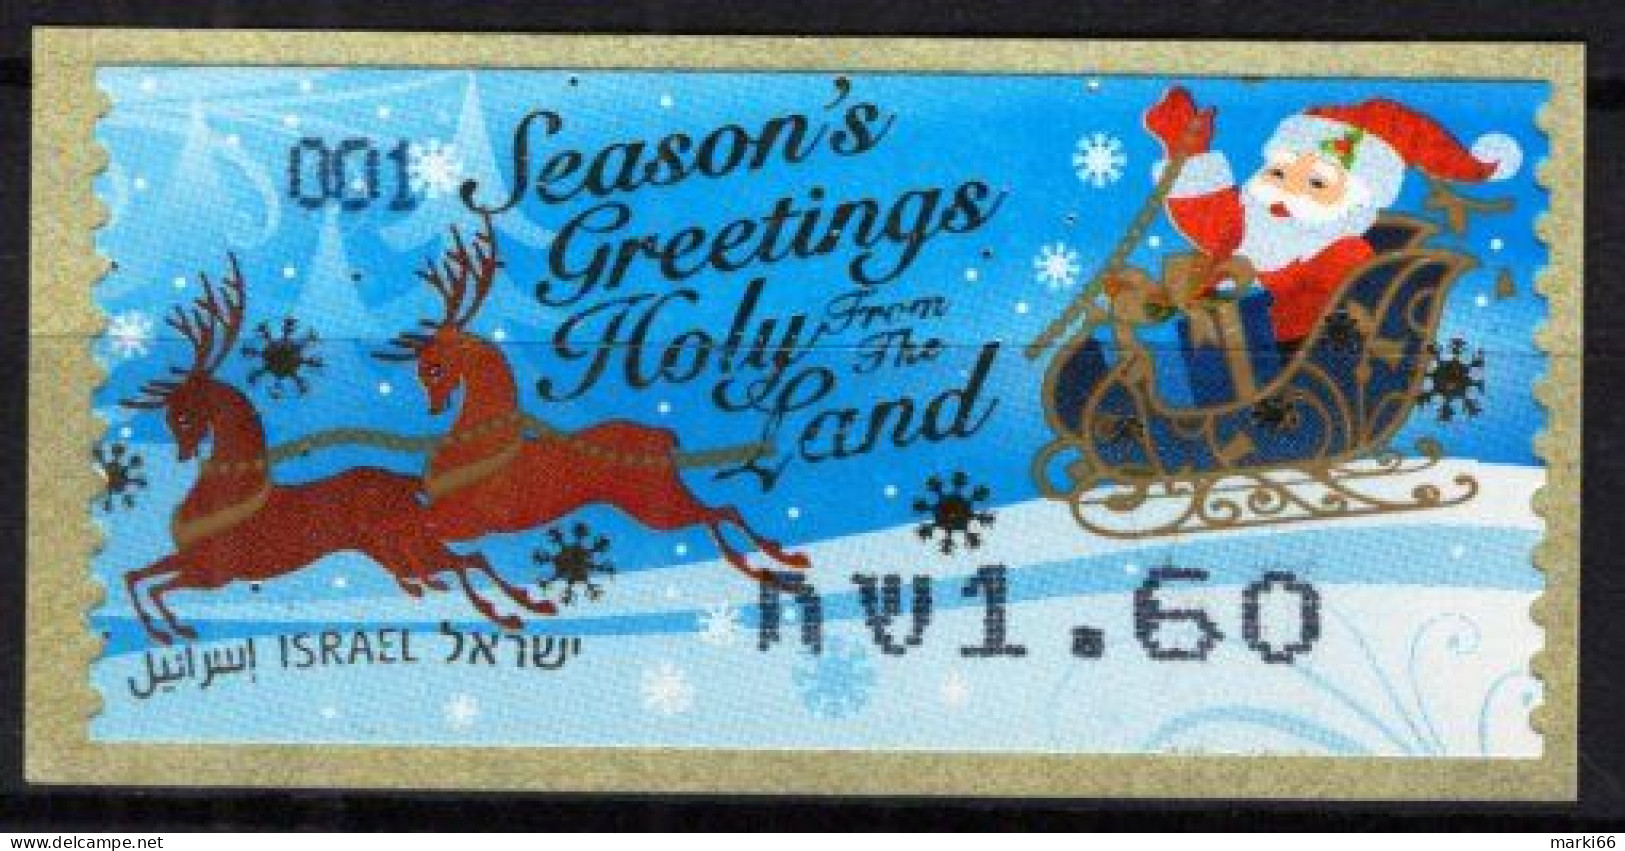 Israel - 2009 - Season's Greetings From Holy Land - Mint ATM Stamp - Viñetas De Franqueo (Frama)